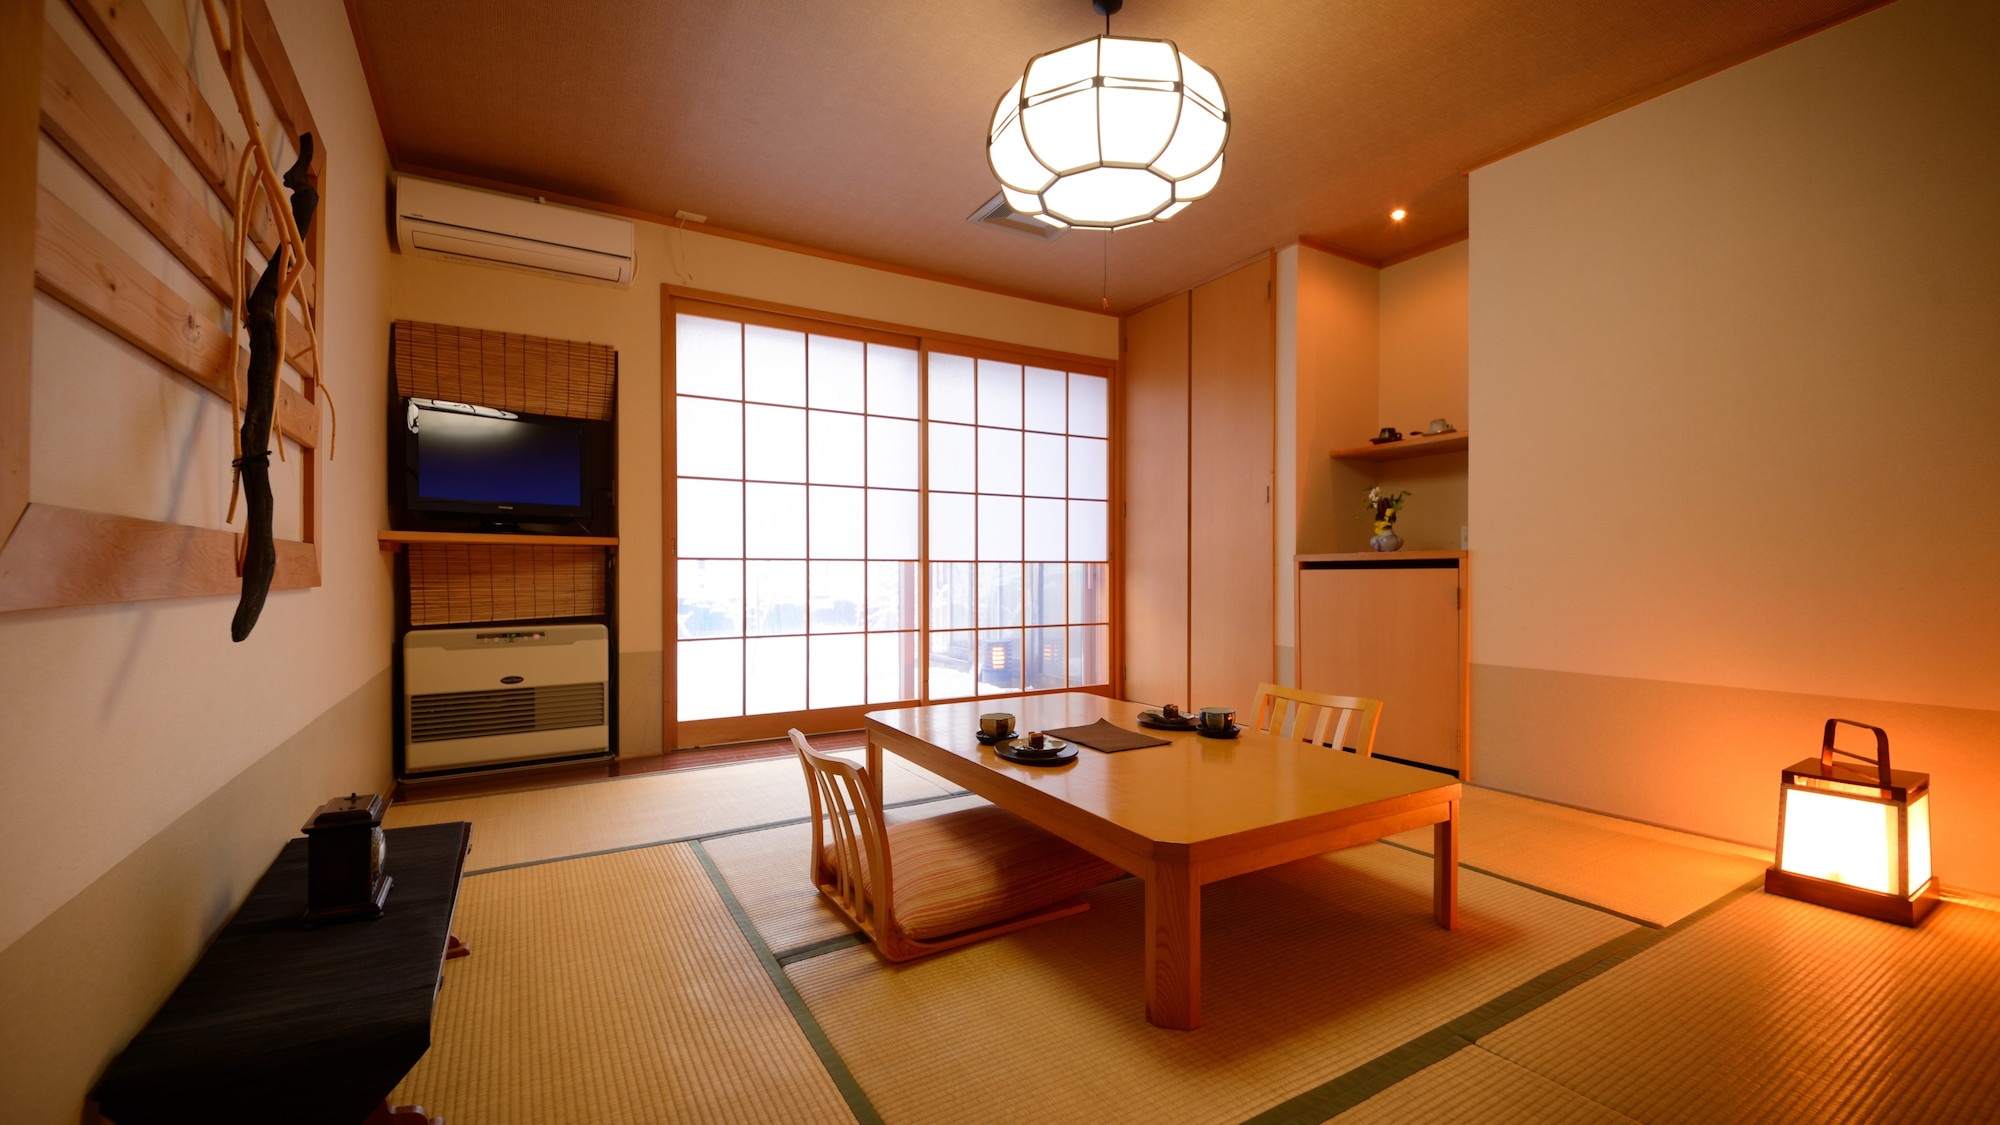 An example of a guest room with a natural hot spring "Tsuki no Uta / Akebono no Sora"